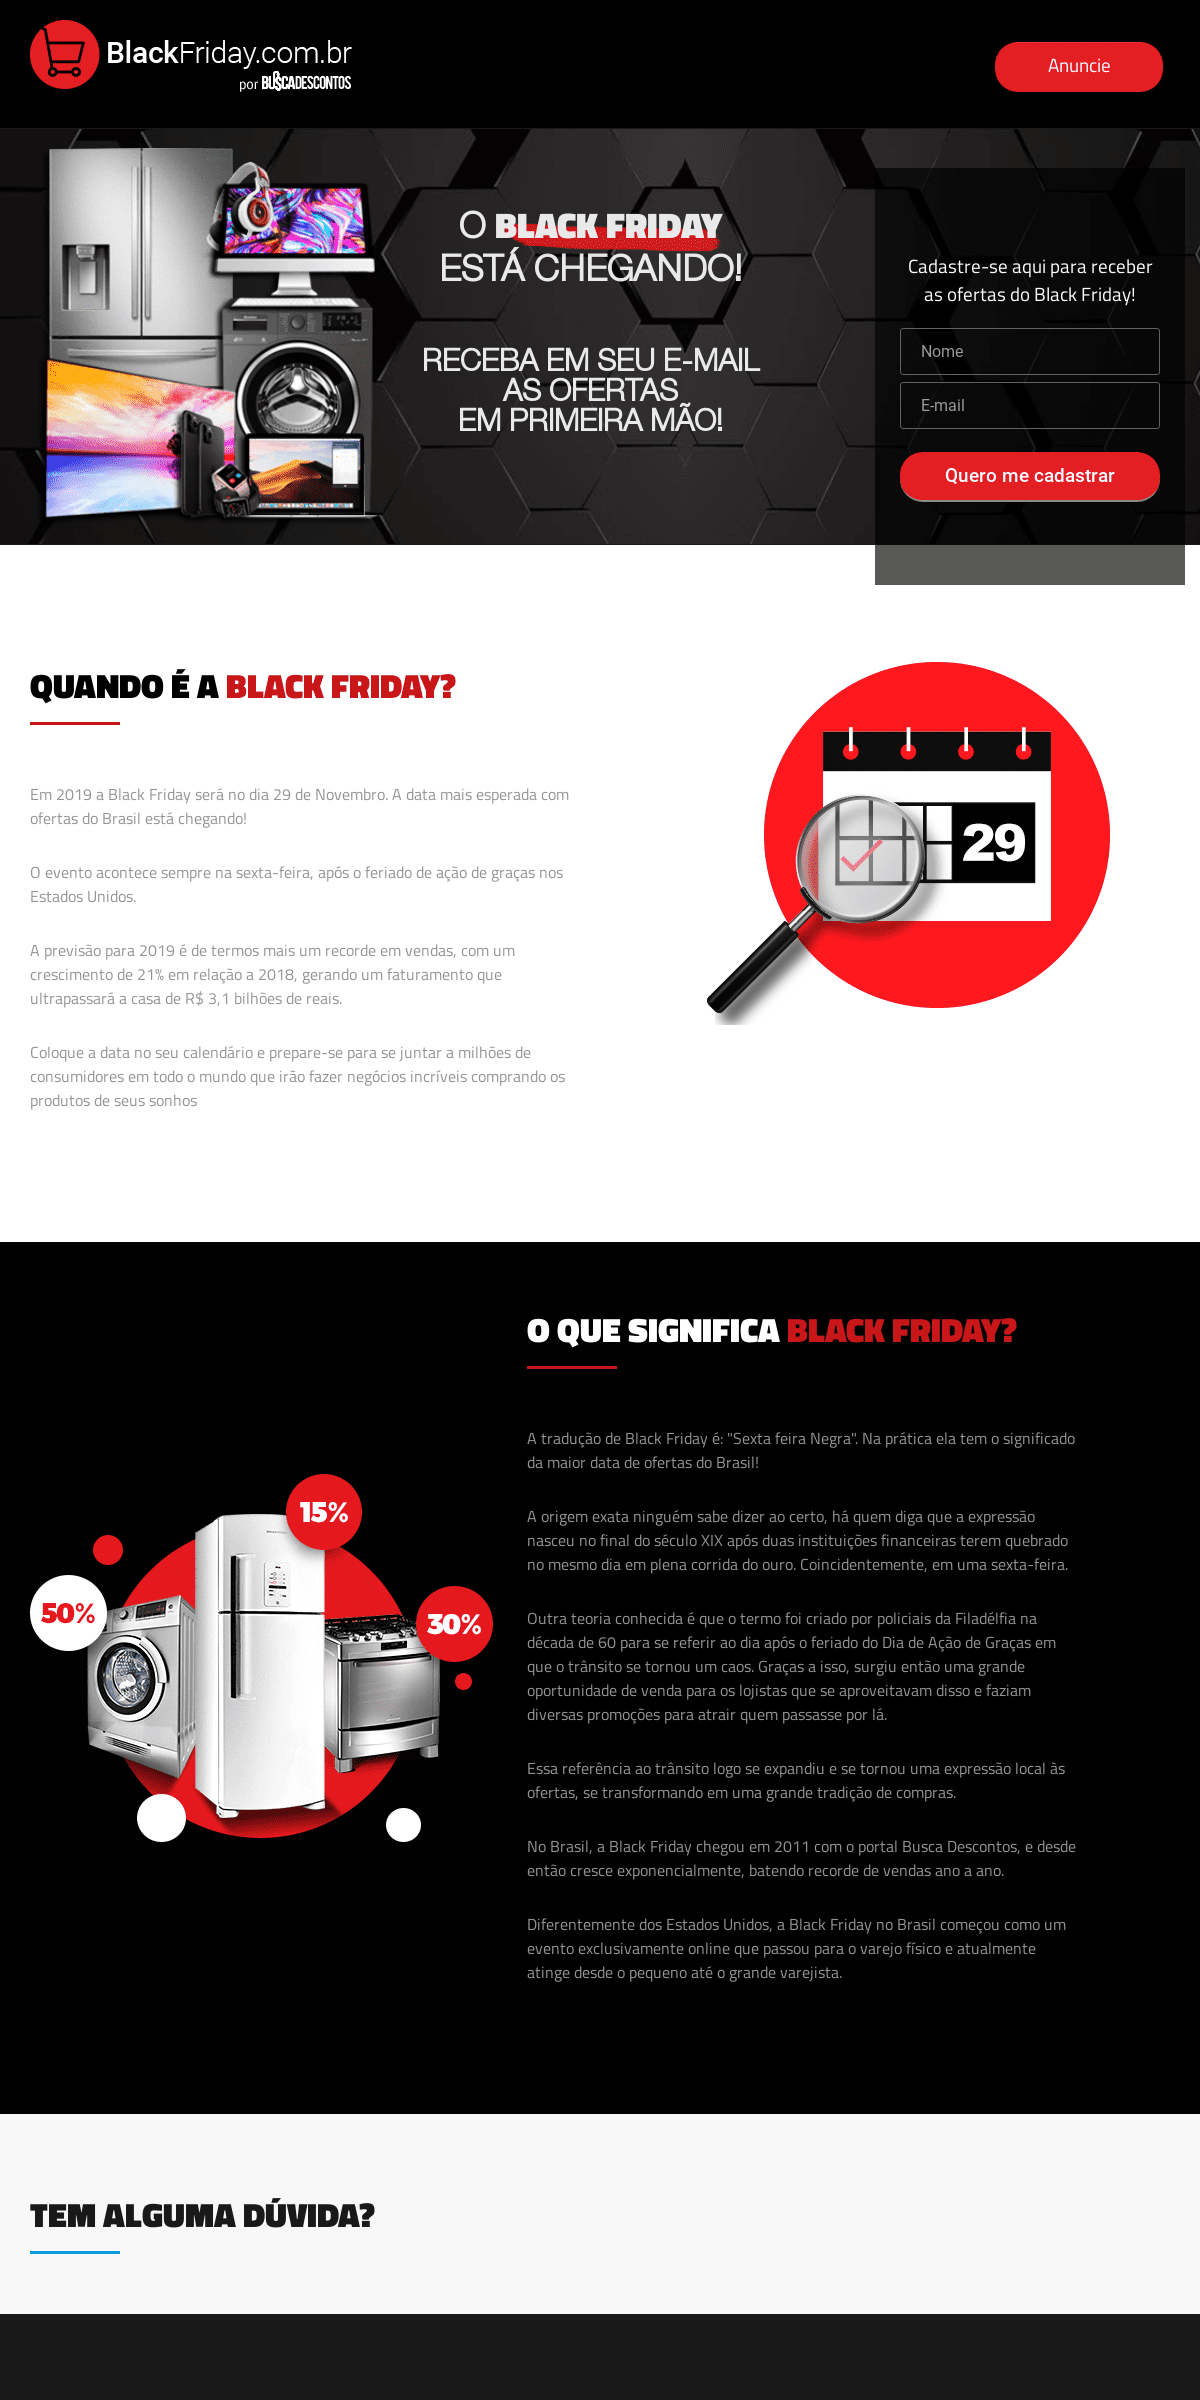 A complete backup of blackfriday.com.br